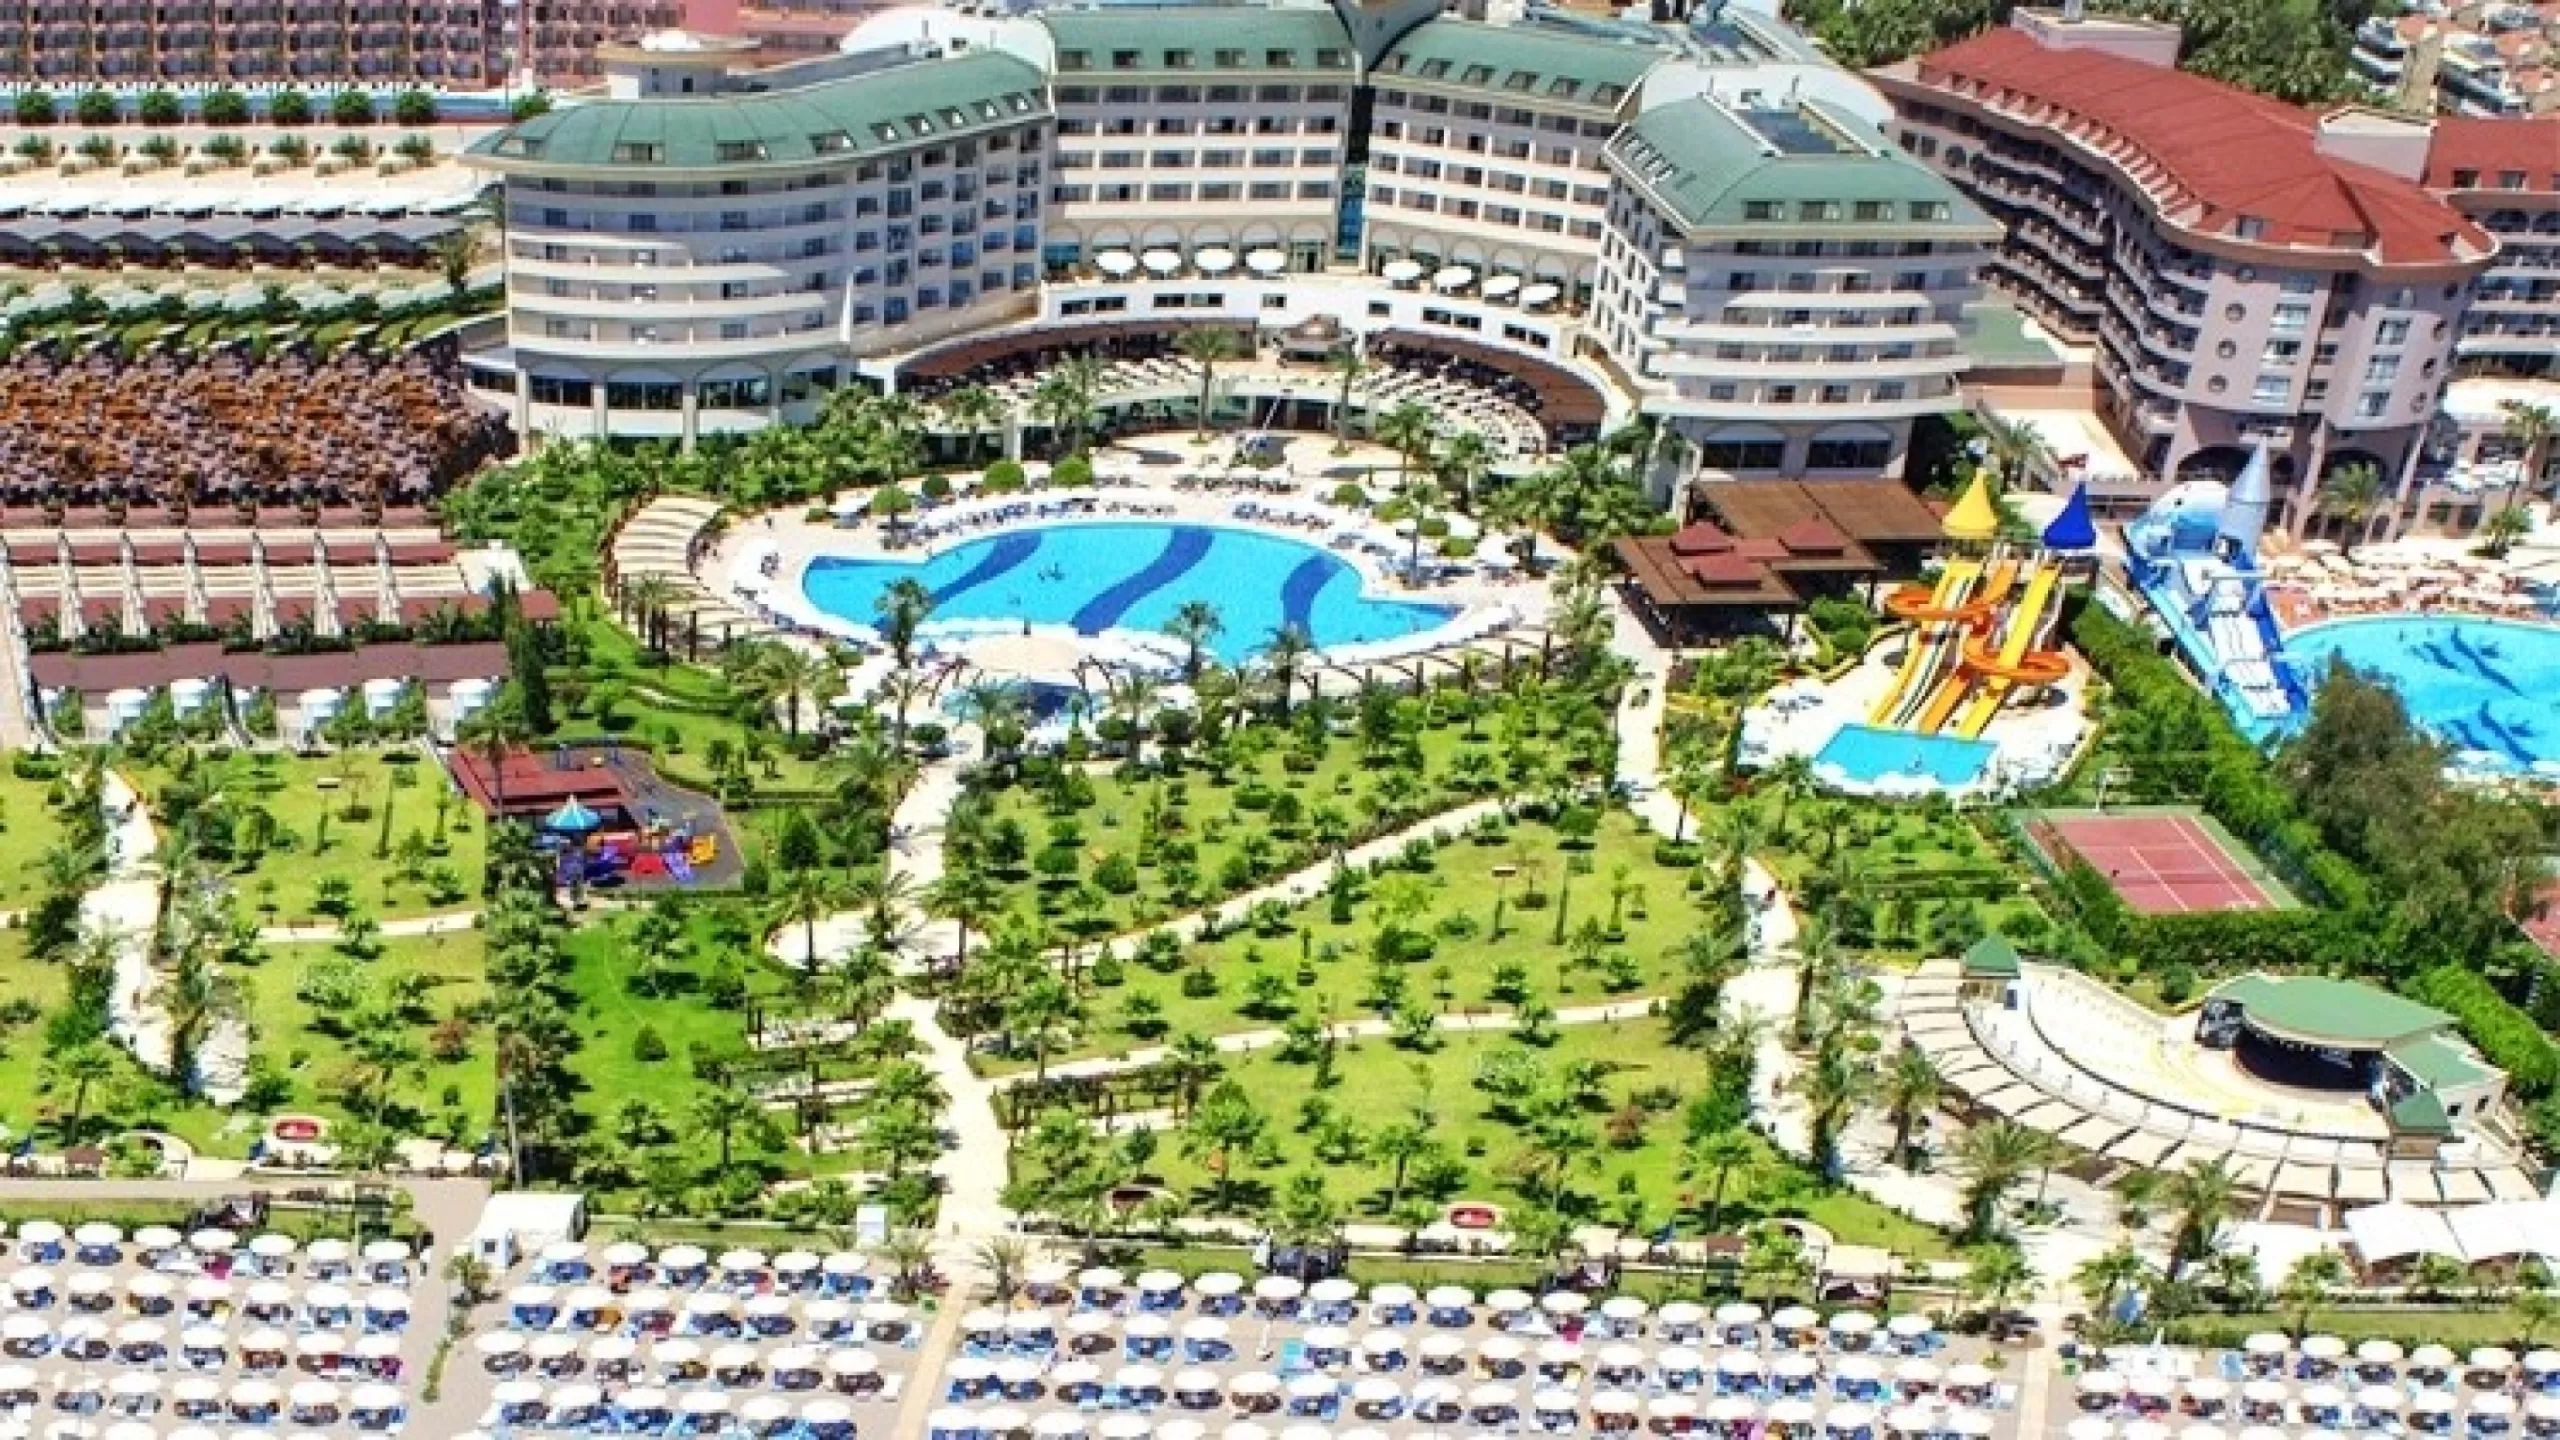 Saphir Resort Spa